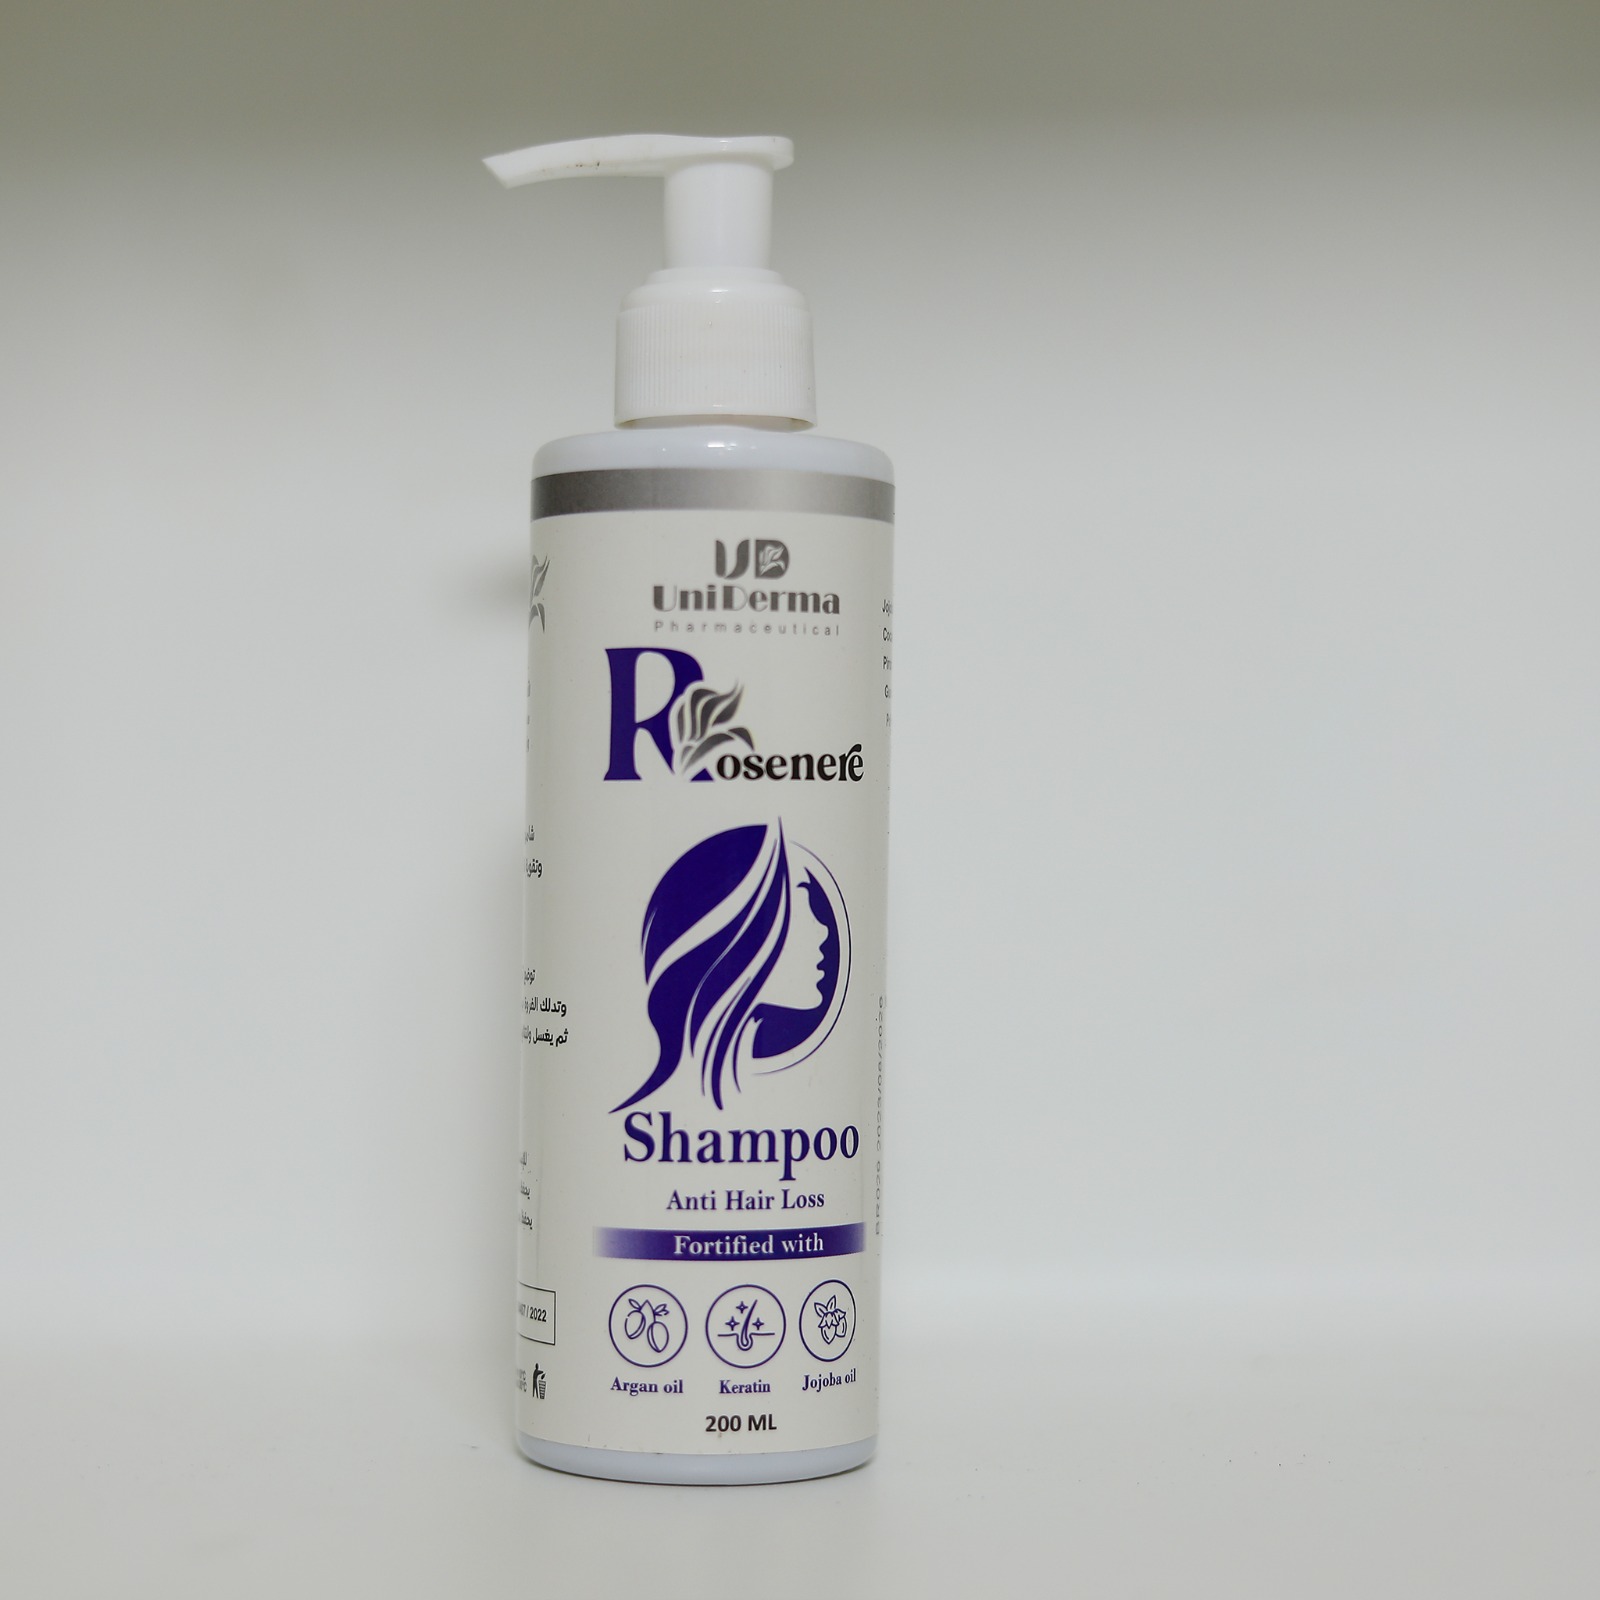 Rosenere ant-hair loss shampoo